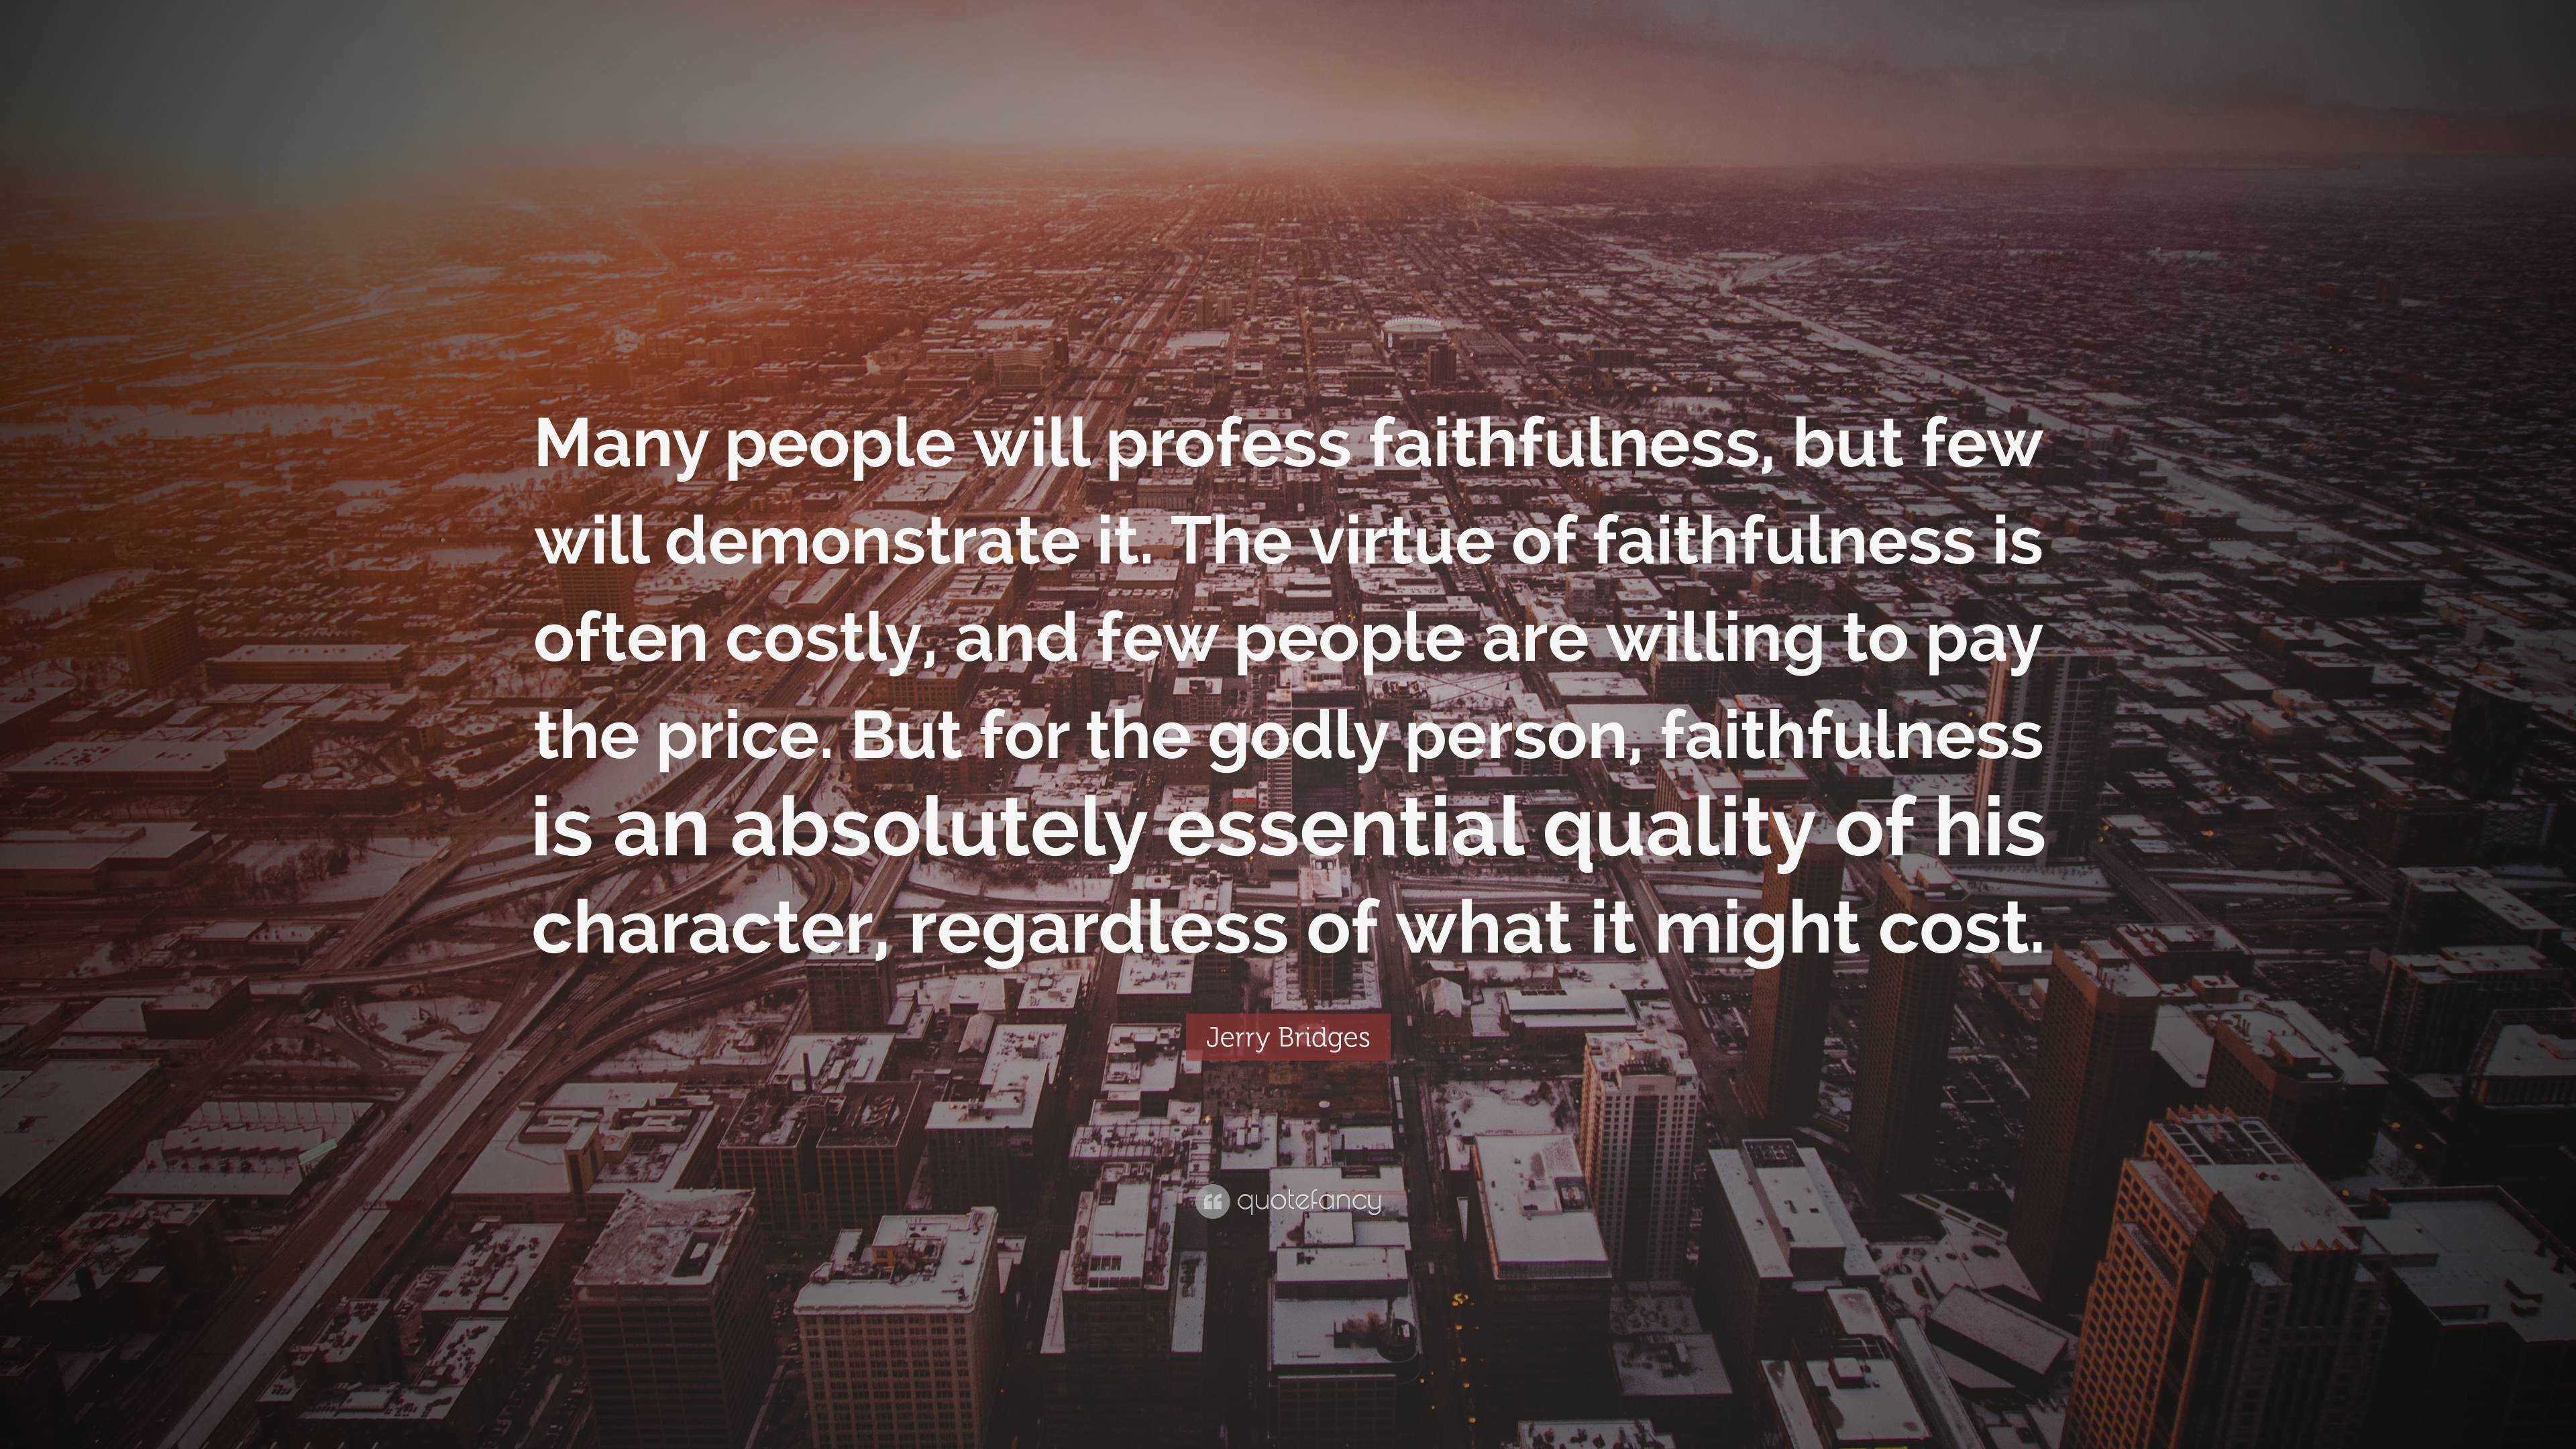 Jerry Bridges Quote: “Many people will profess faithfulness, but few ...